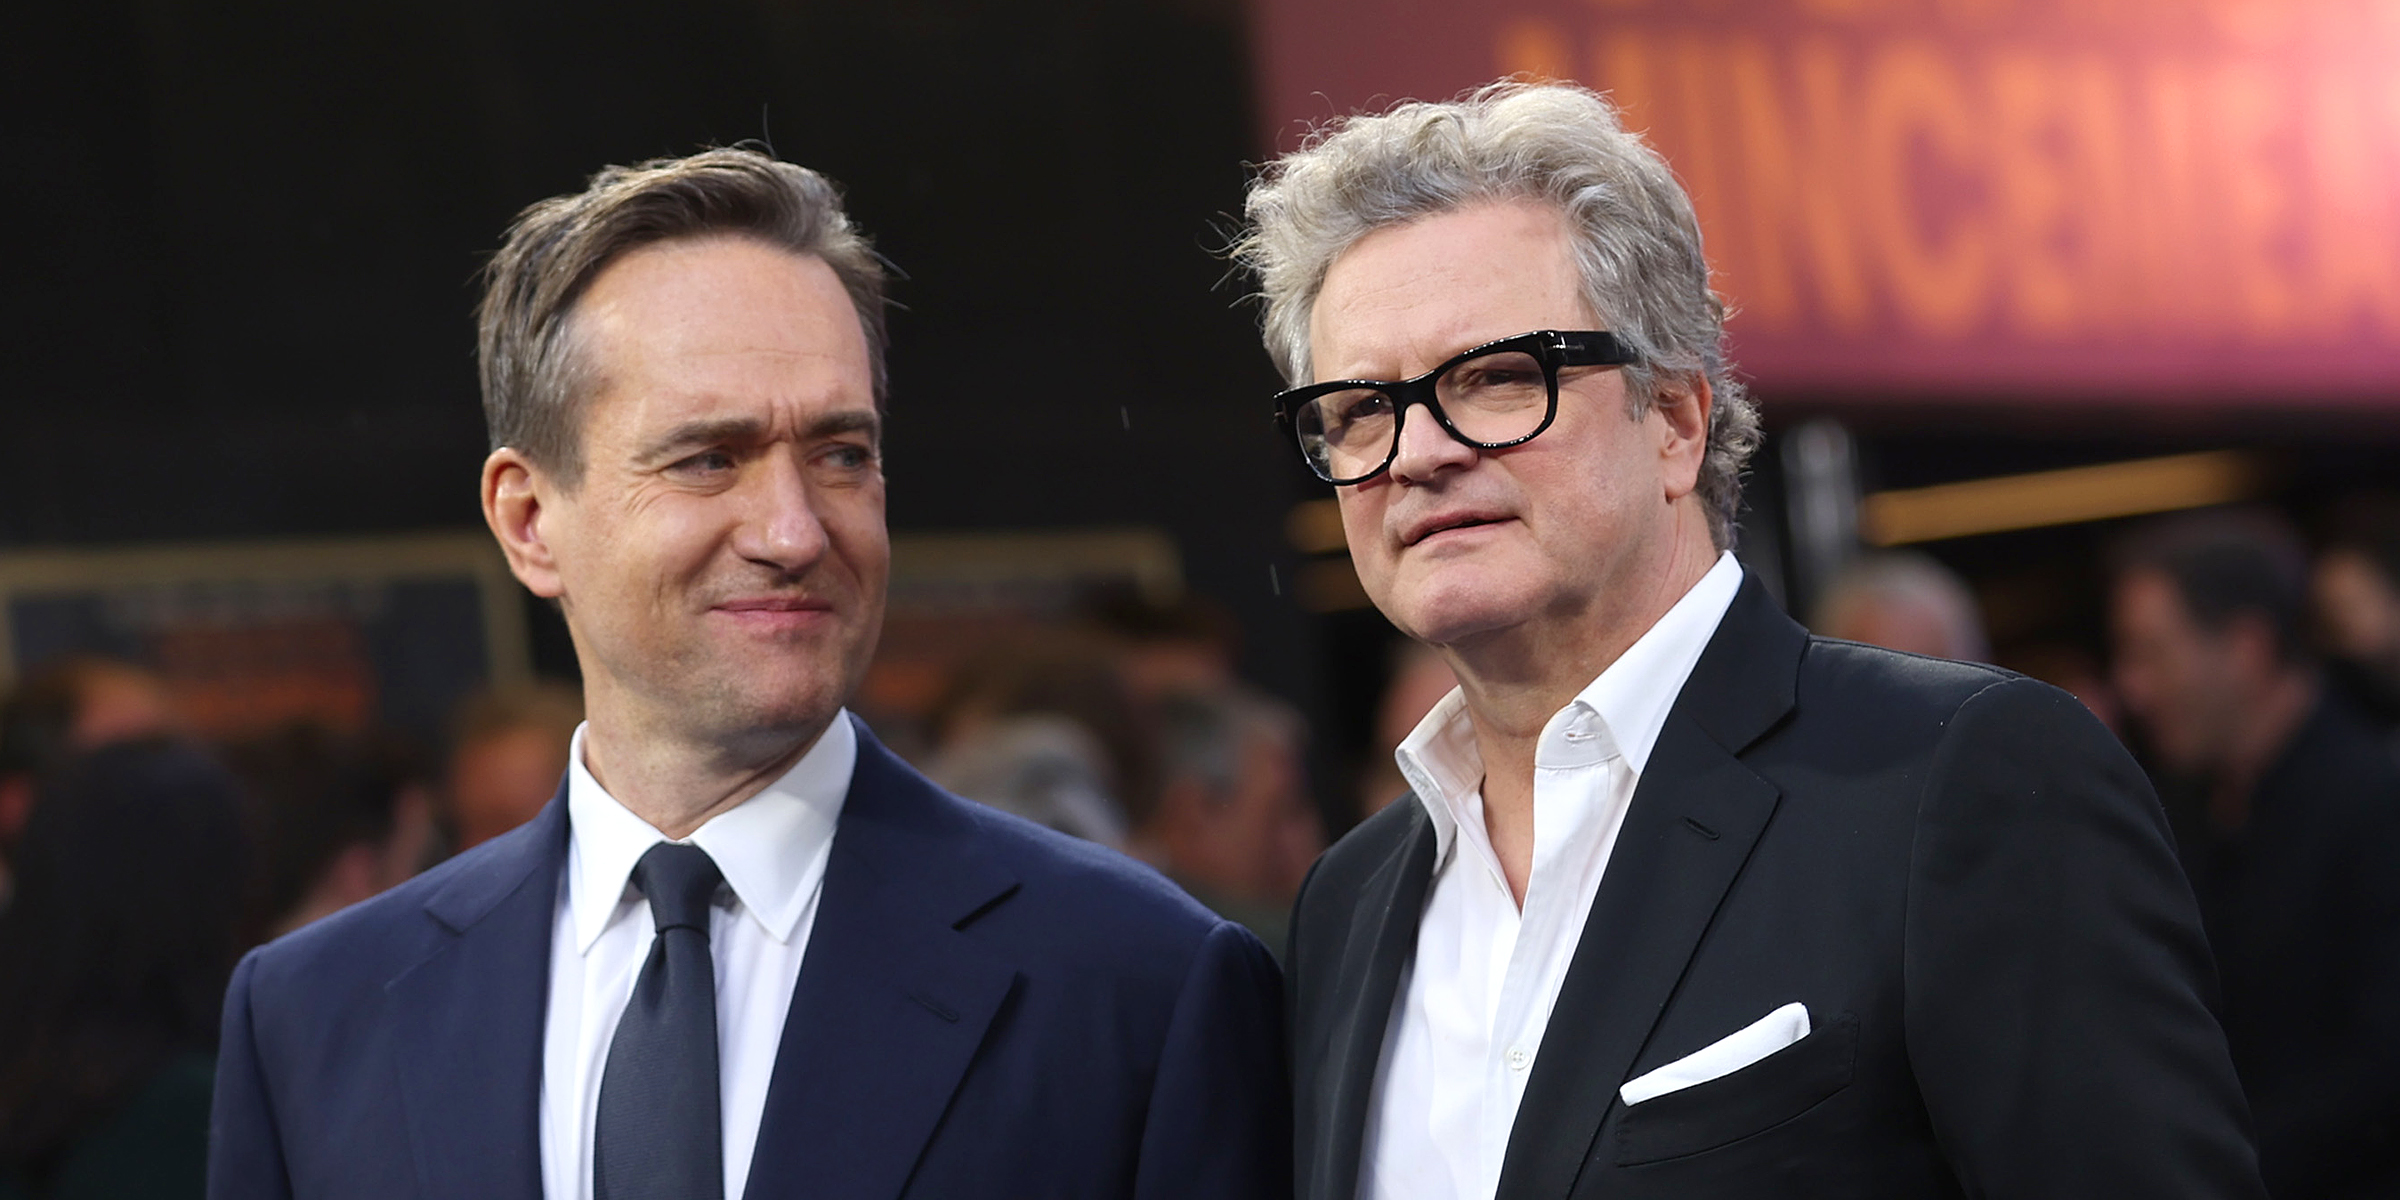 Matthew Macfadyen and Colin Firth | Source: Getty Images